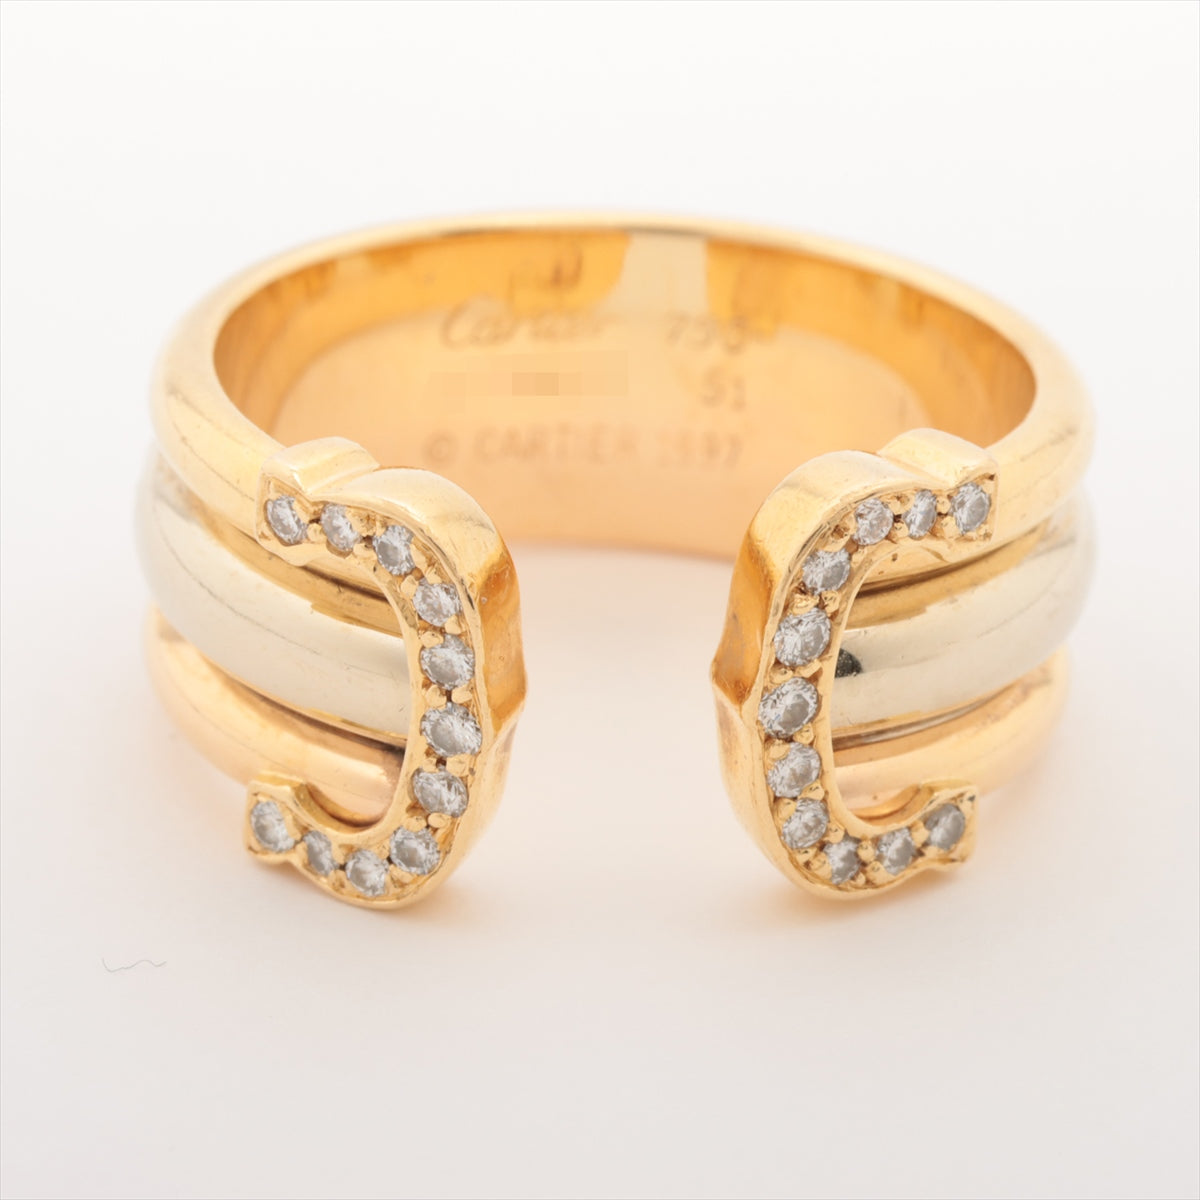 Cartier 2C Diamond Ring 750(YG×PG×WG) 8.0g 51 distortions